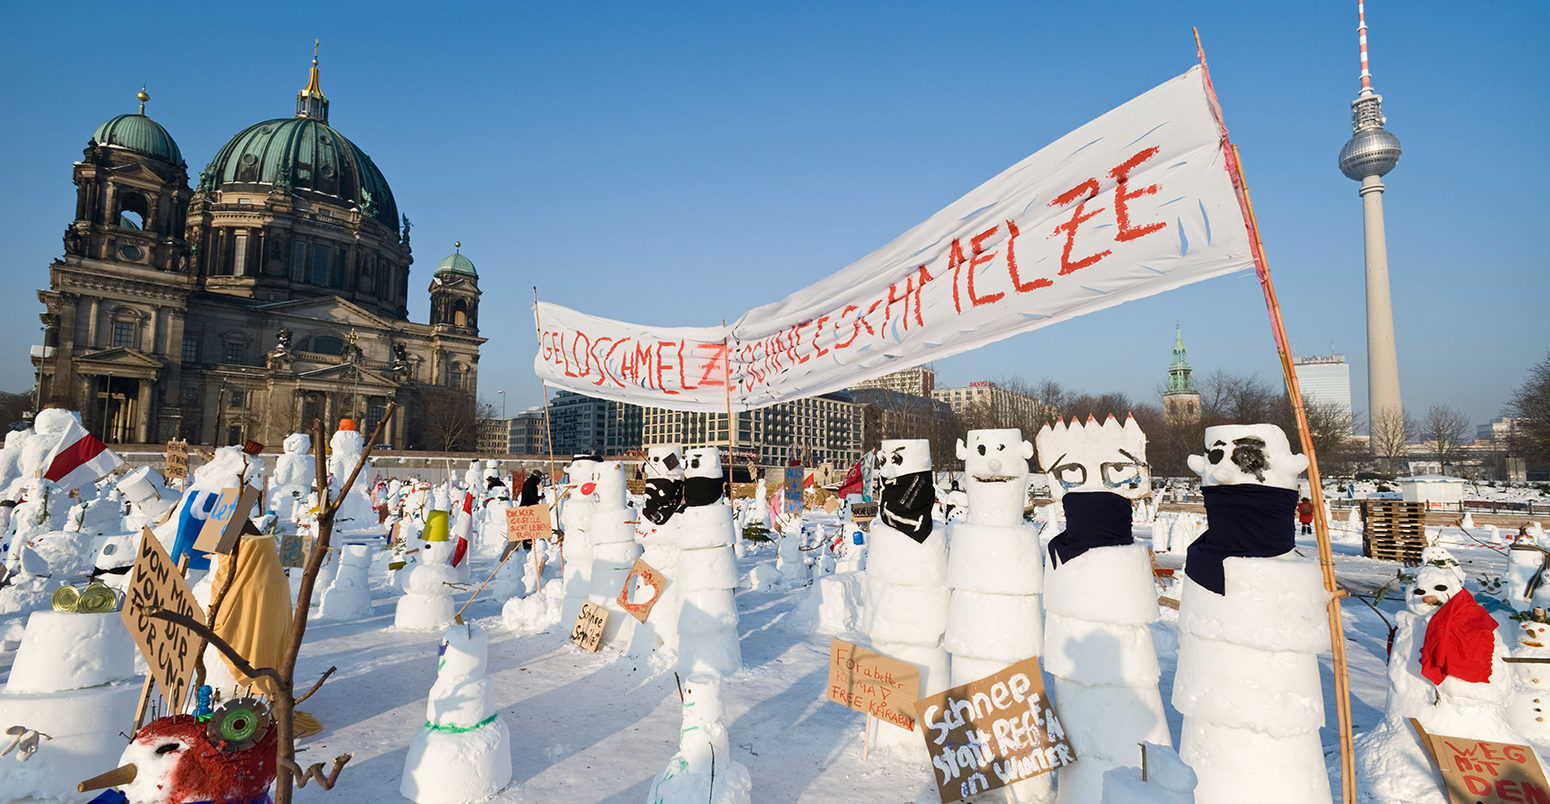 Snowman Demo 2010 on the Schlossplatz, Castle Square, Berlin, Germany, Europe